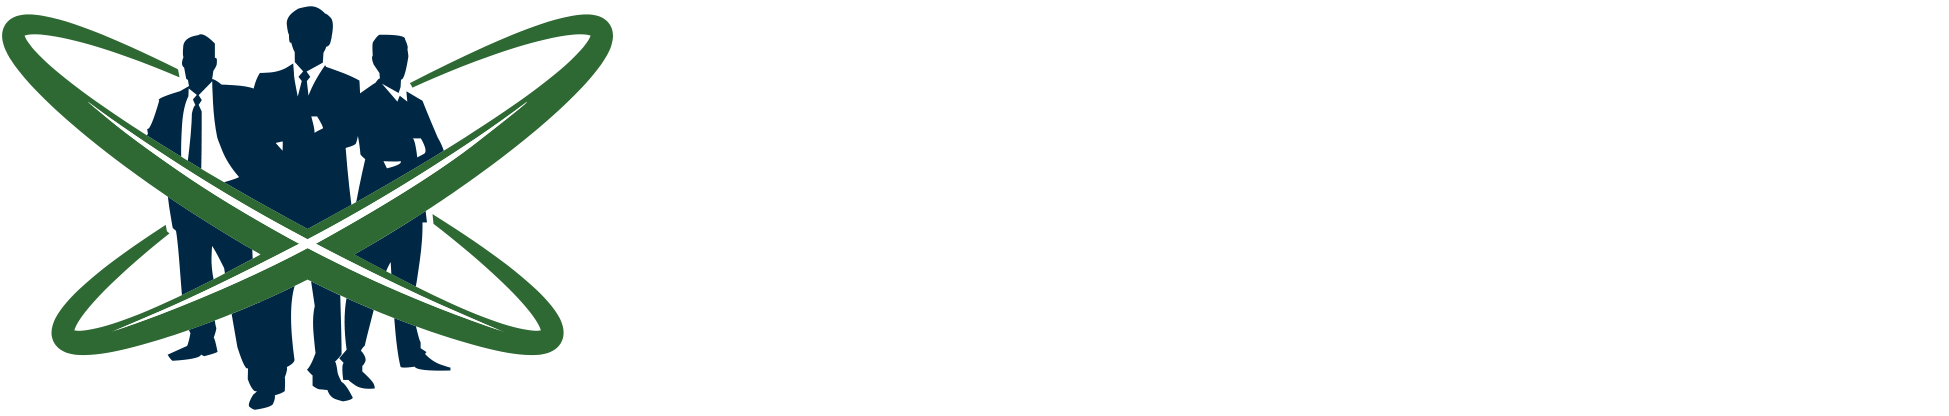 kasas-logo2